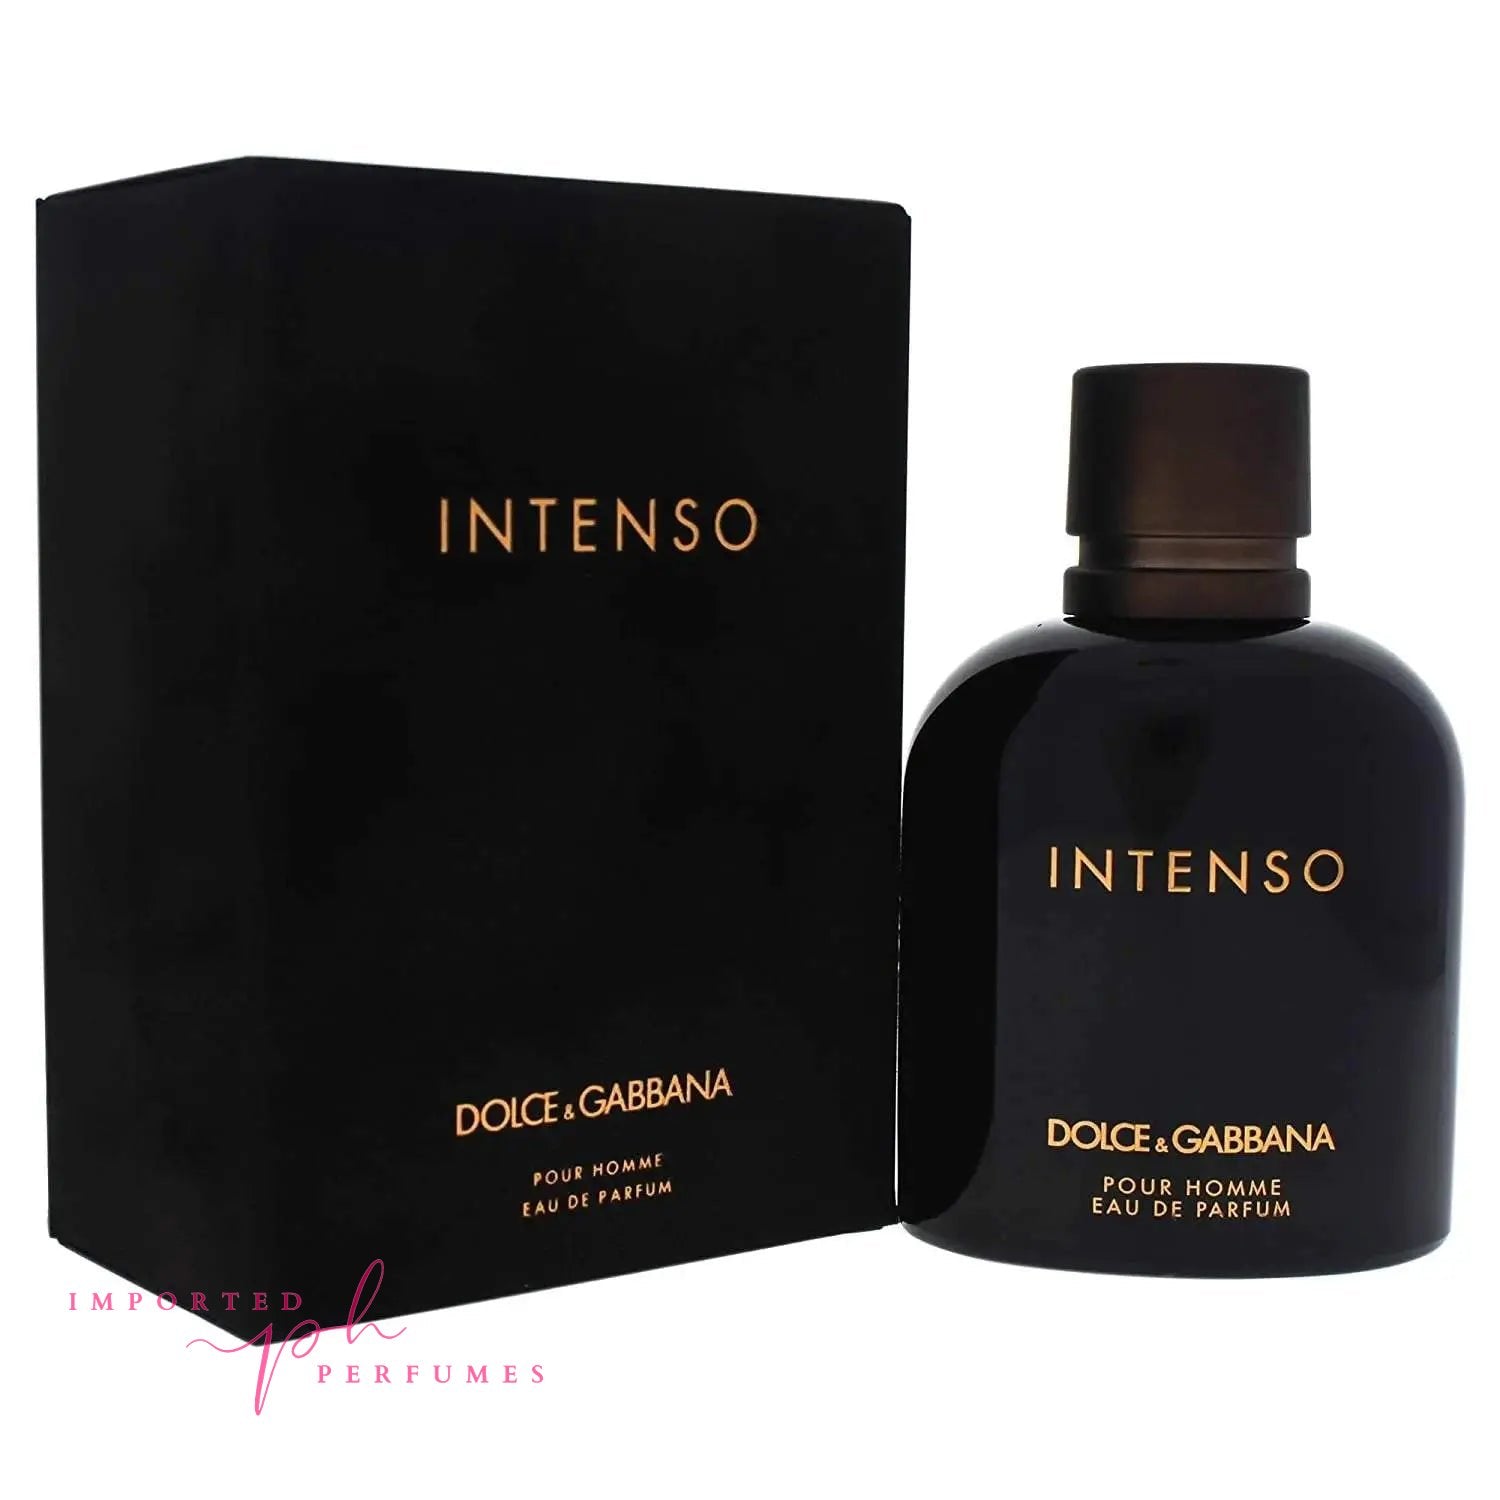 [TESTR] Dolce & Gabbana Intenso Eau De Parfum For Men 125ml Imported Perfumes Co